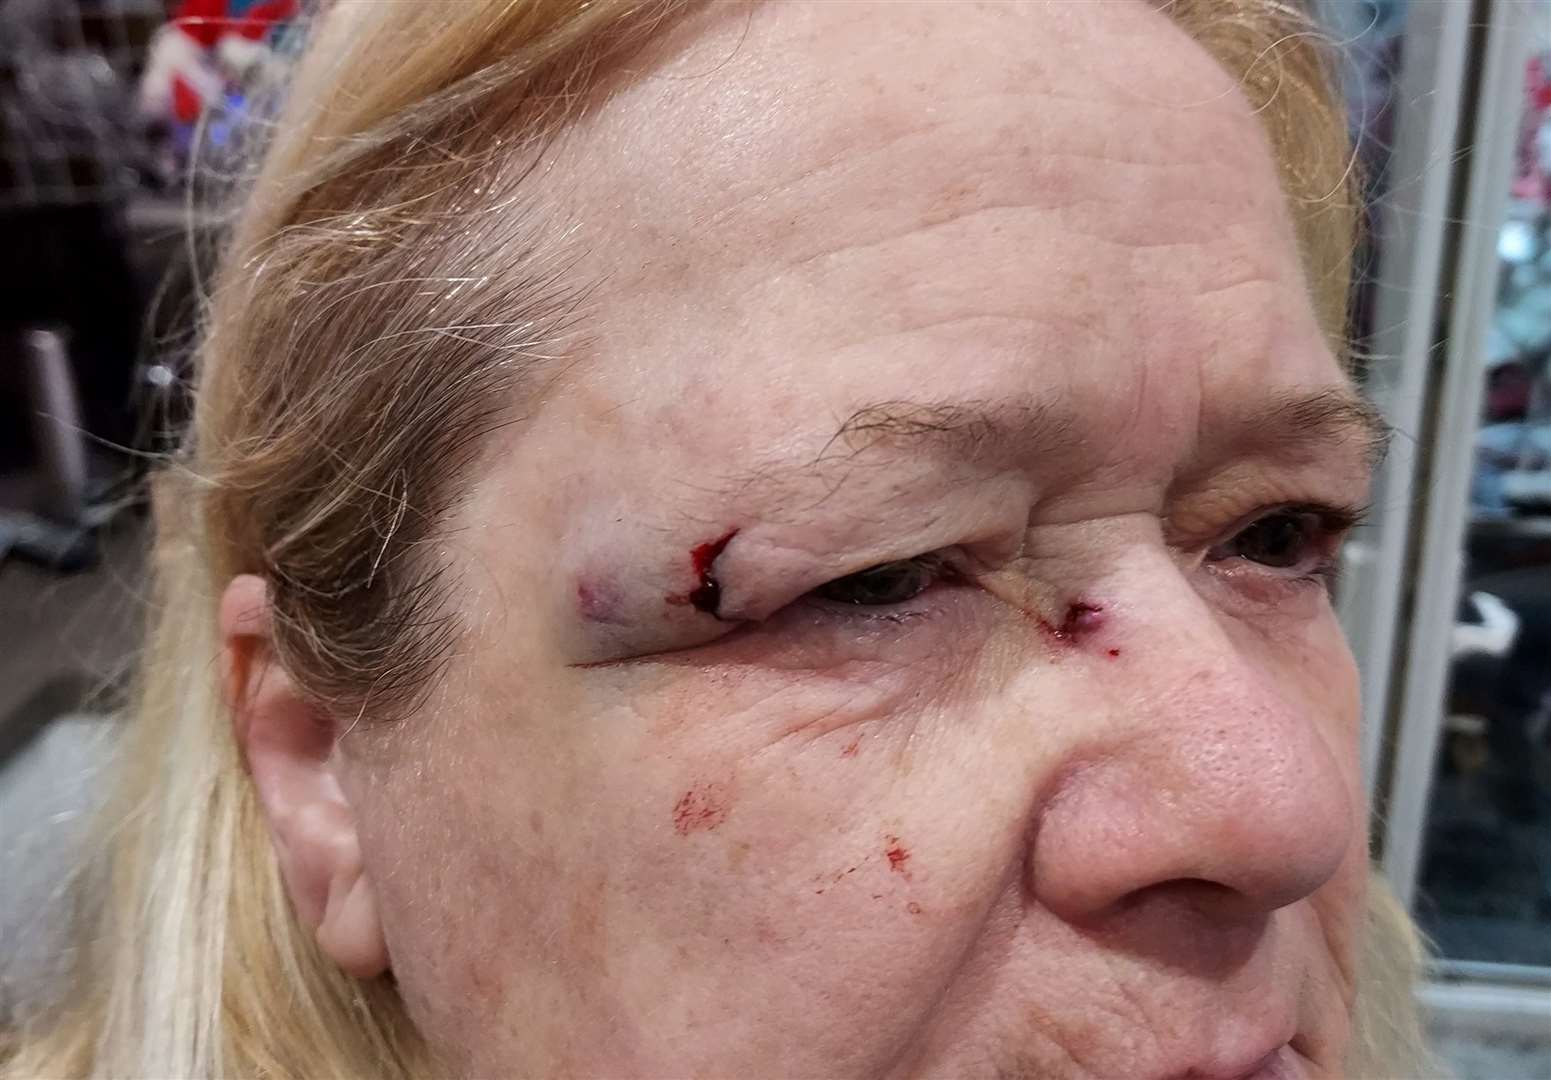 Angela Blacklocks suffered a cut and bruised eye